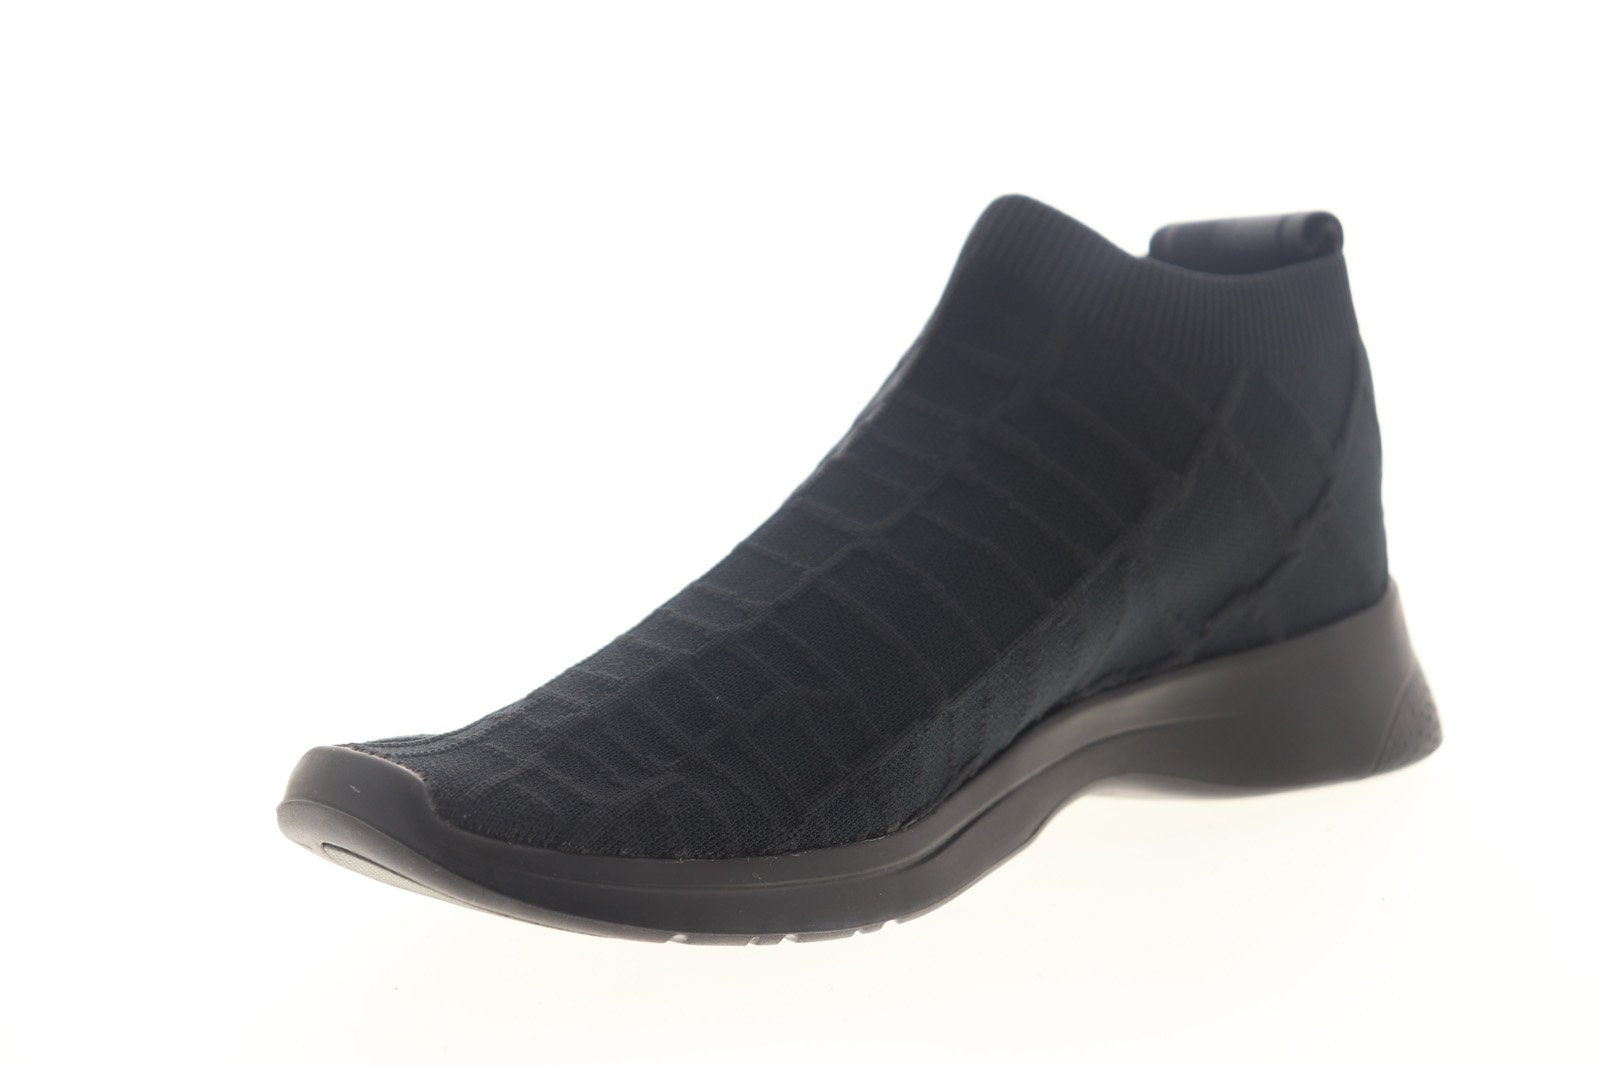 Lacoste LT Fit Sock 319 1 SMA Black Canvas Slip On Lifestyle Snea Ruze Shoes